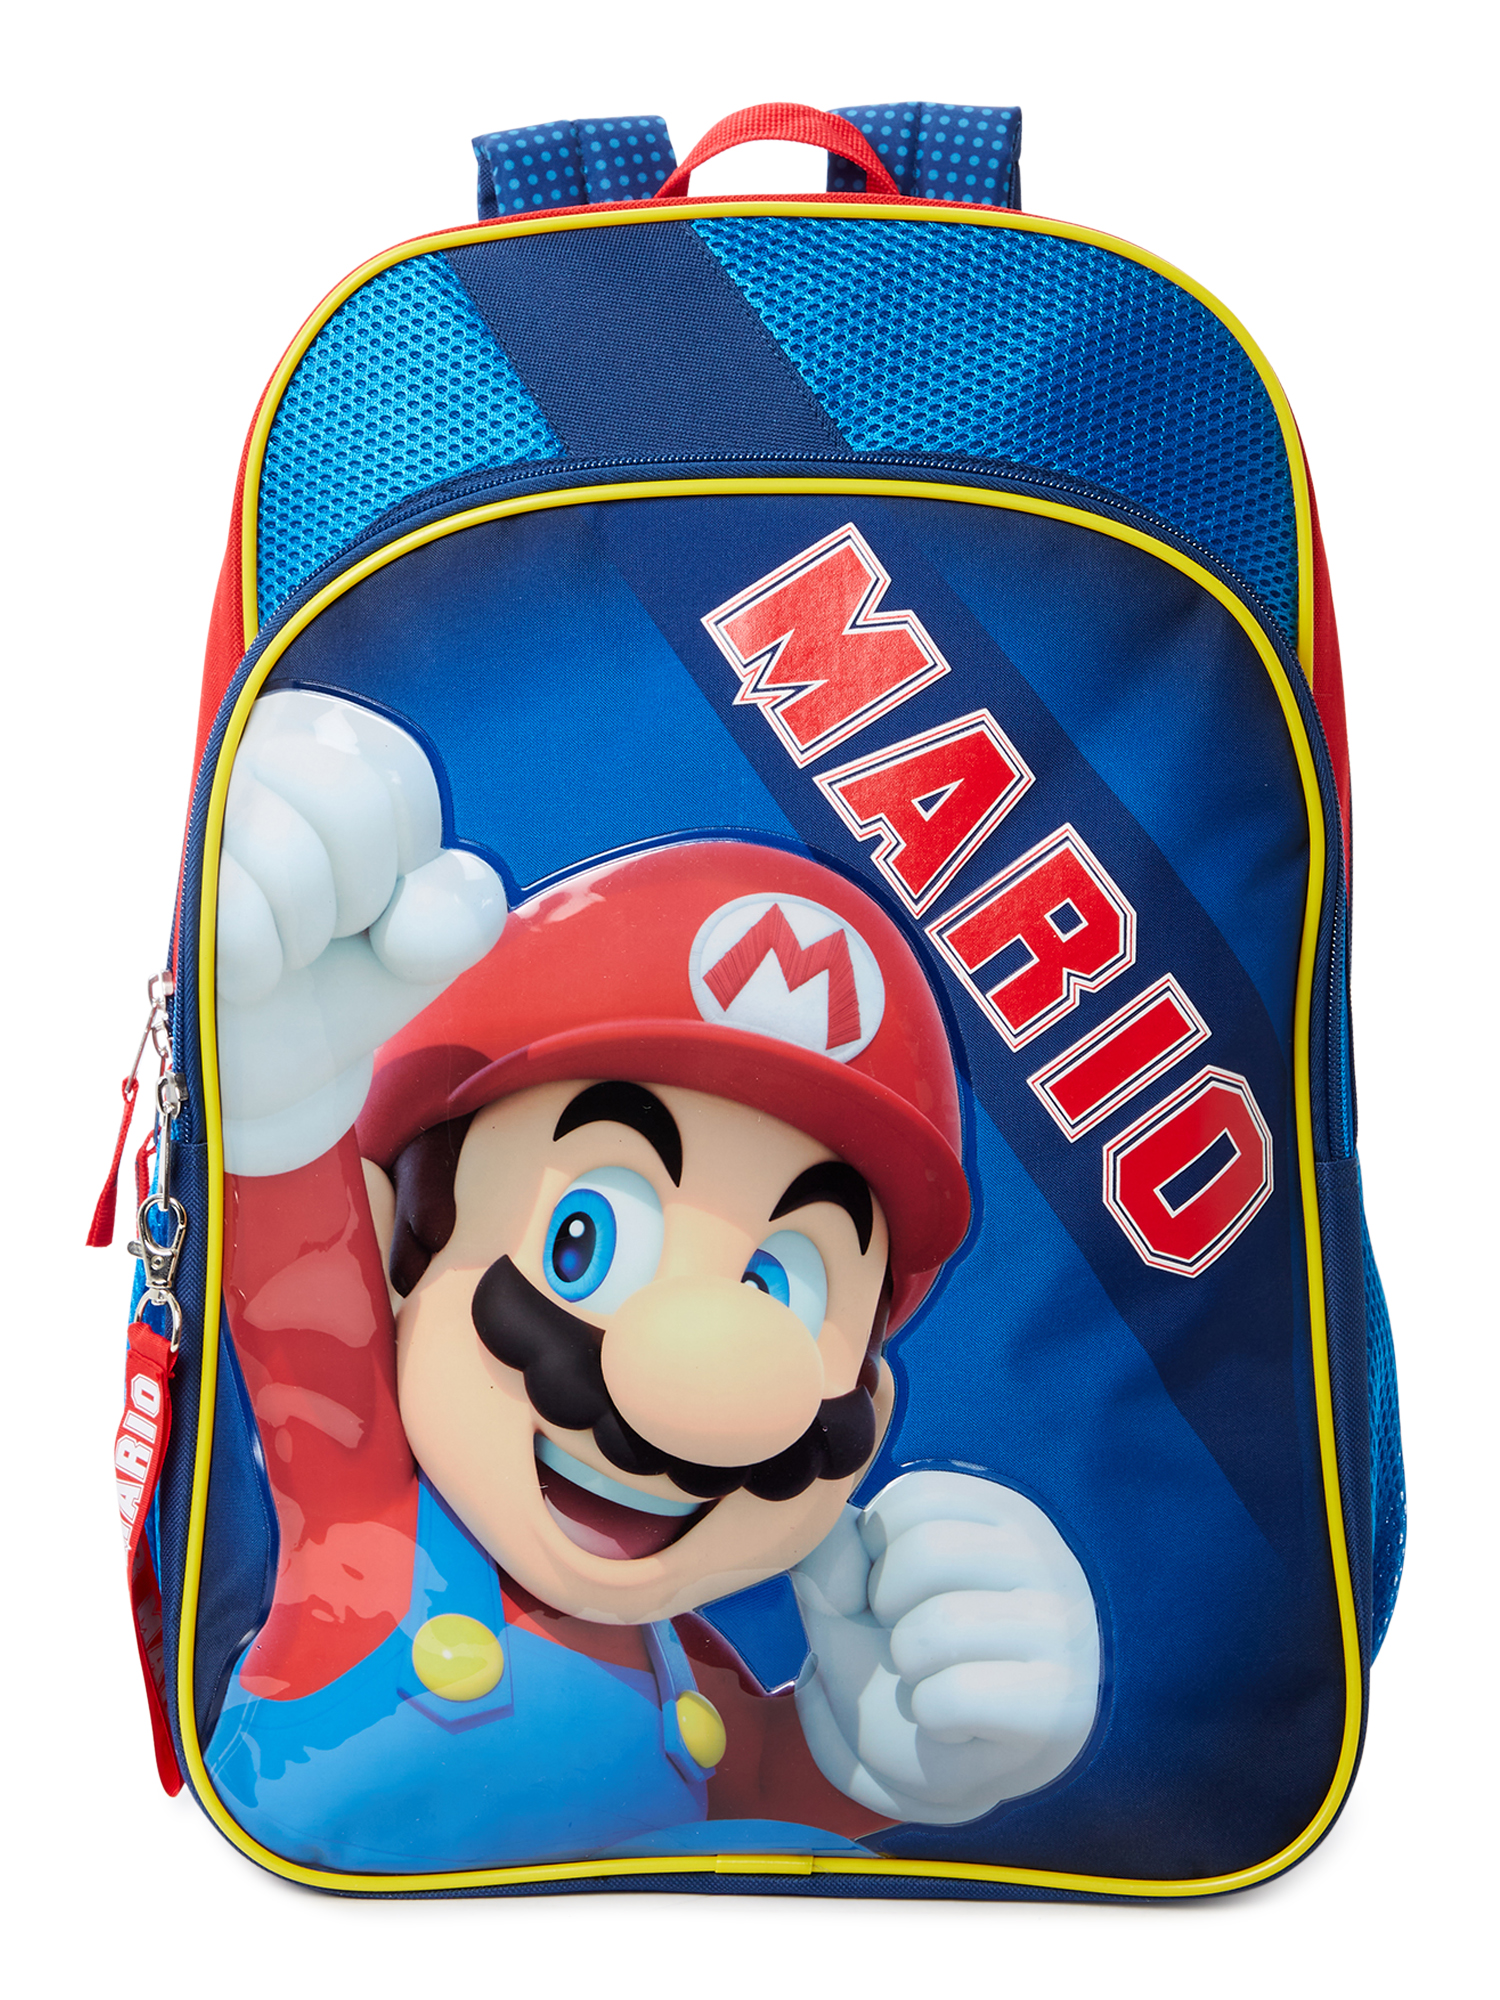 Nintendo Super Mario Bros. Kids’ Backpack Blue Red - image 1 of 5